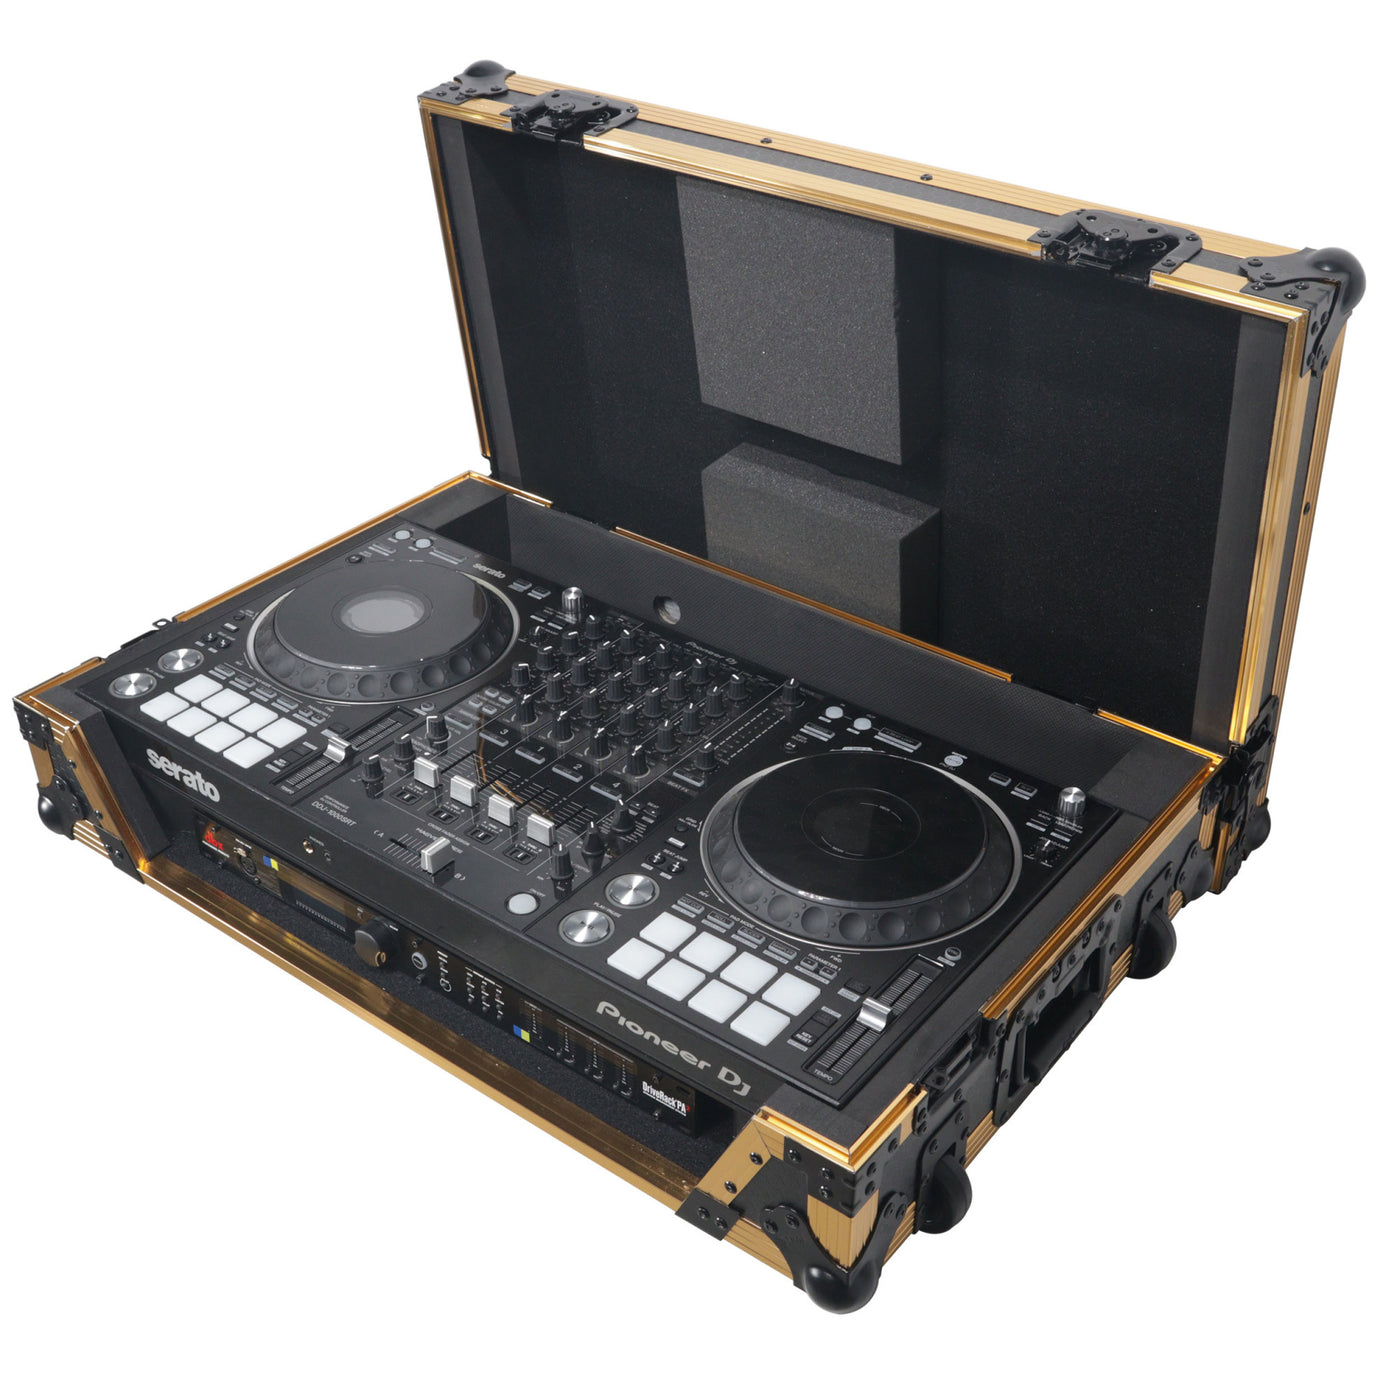 ProX XS-DDJ1000WGLD ATA Flight Case, For DDJ-1000 FLX6 SX3 DJ Controller, 1U Rack Space, With Wheels, Pro Audio Equipment Storage, Gold Black